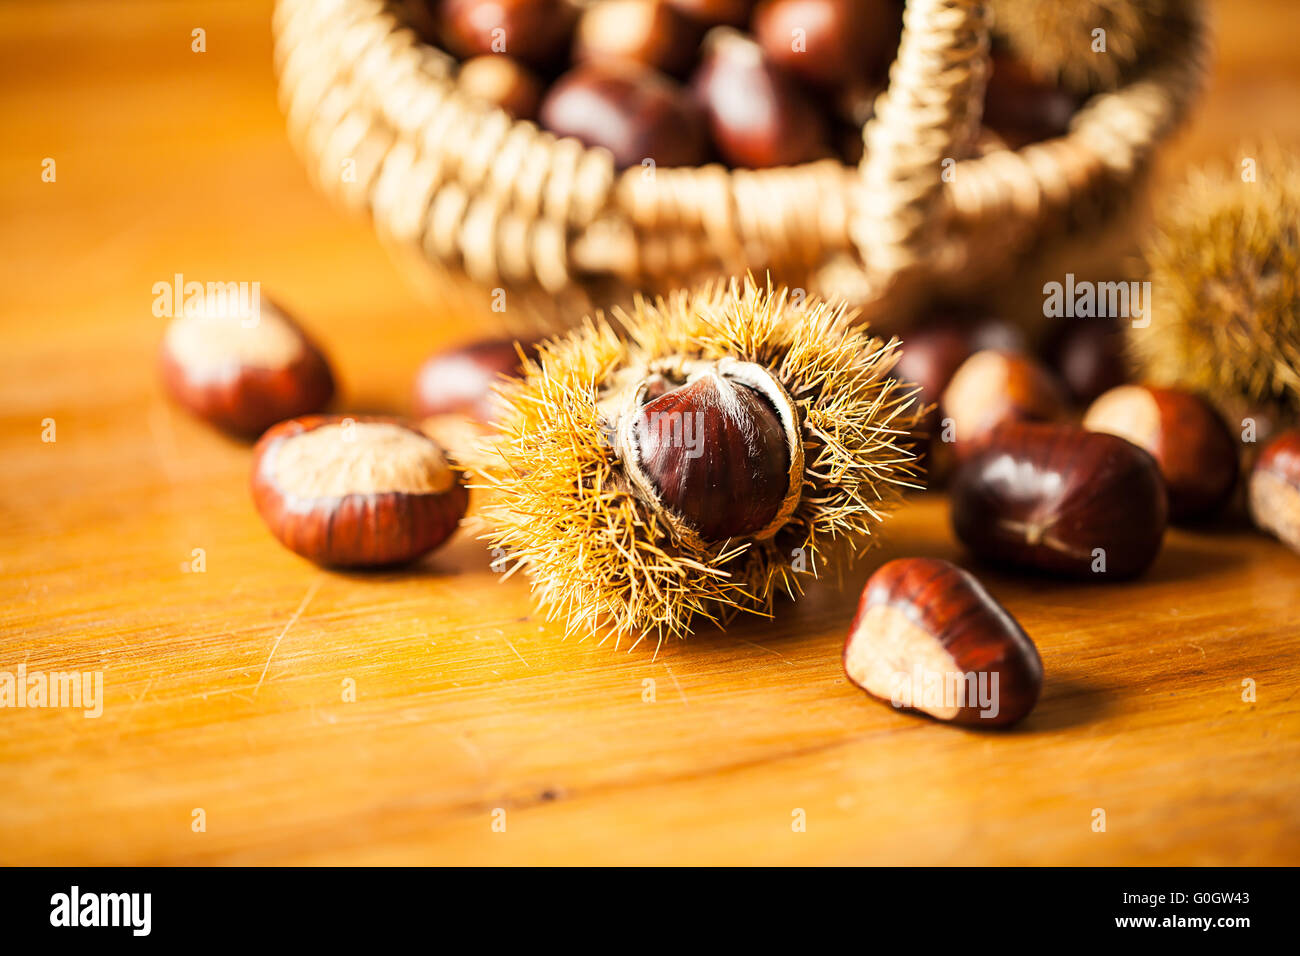 Sweet chestnut (Castanea sativa) Stock Photo